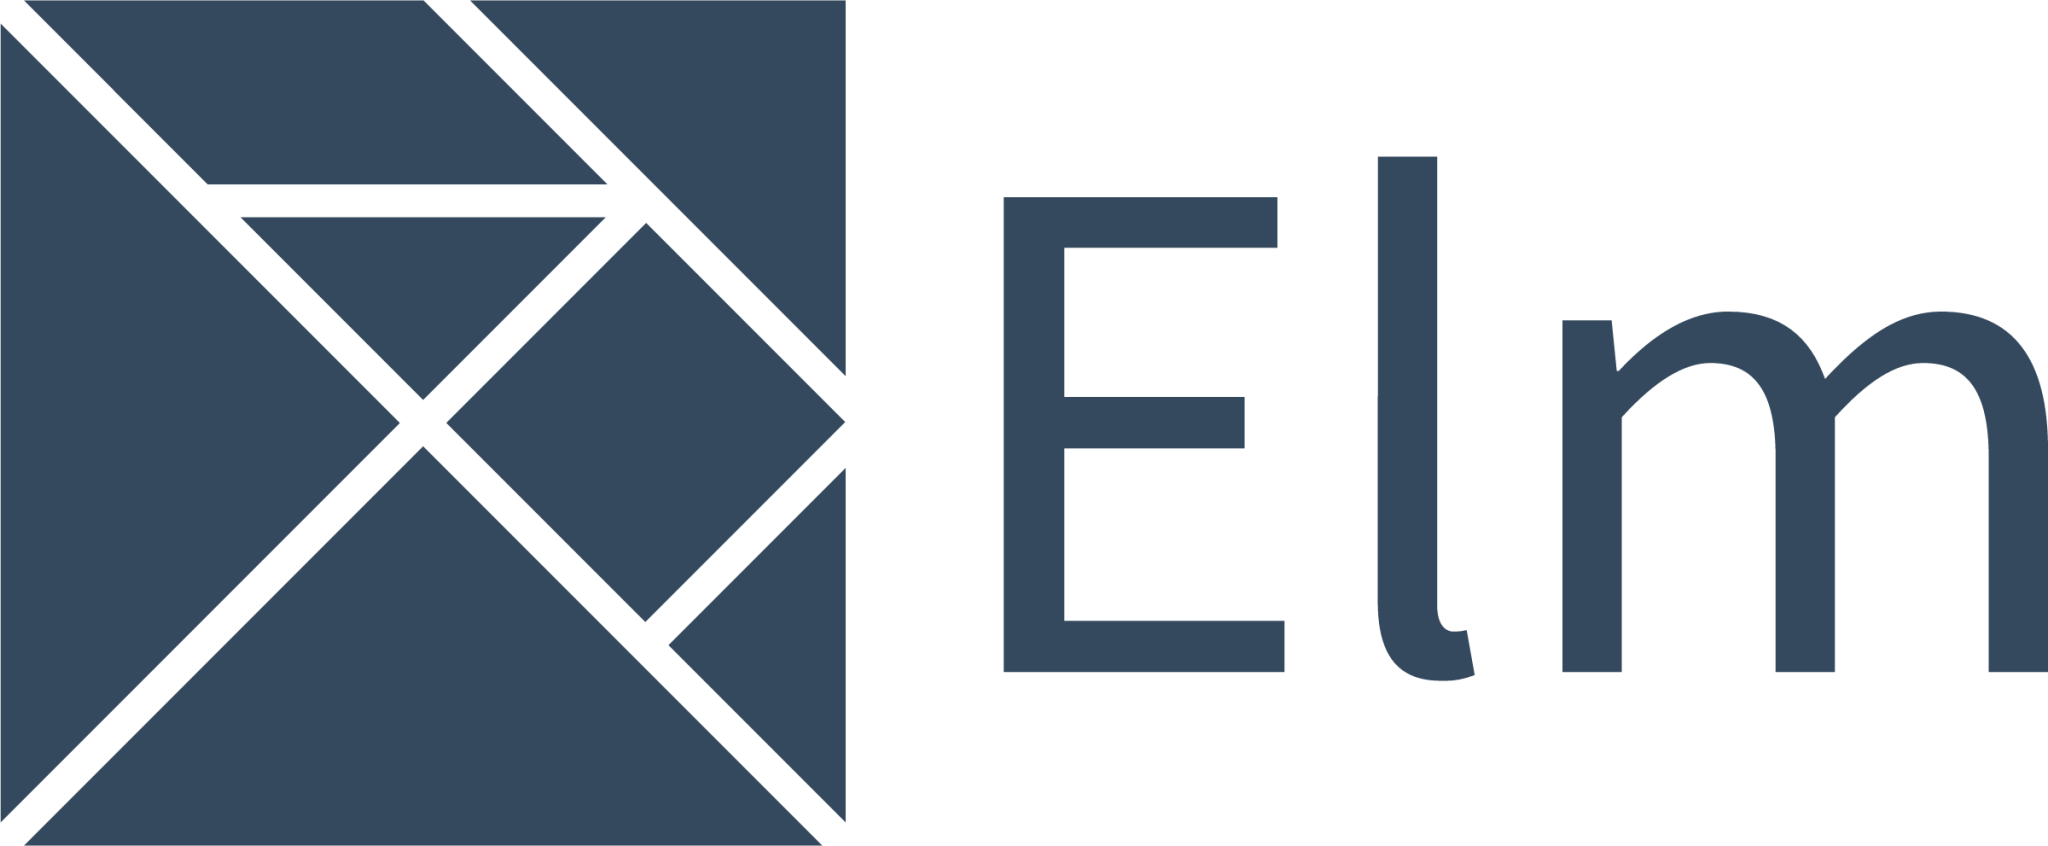 elm plain wordmark icon